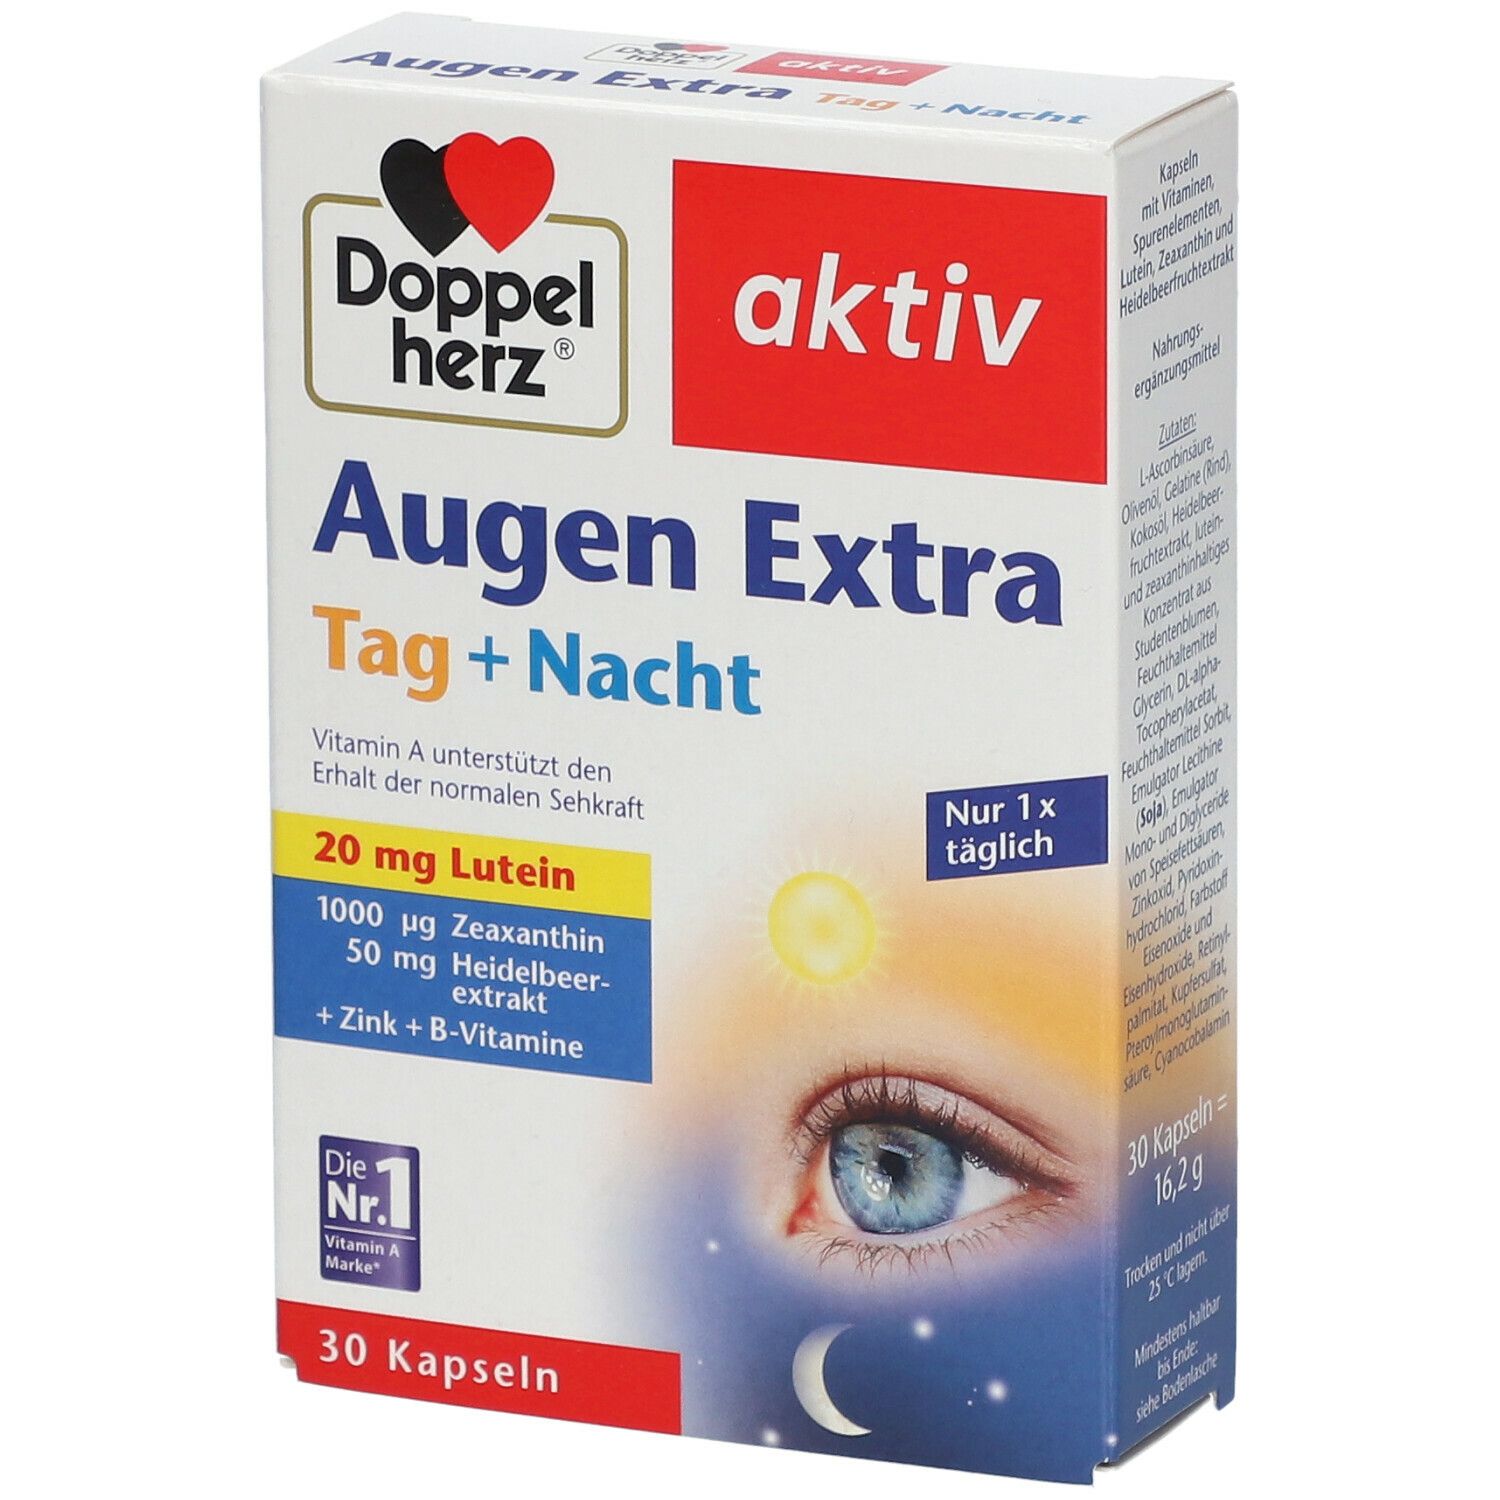 Image of Doppelherz® aktiv Augen Extra Tag + Nacht